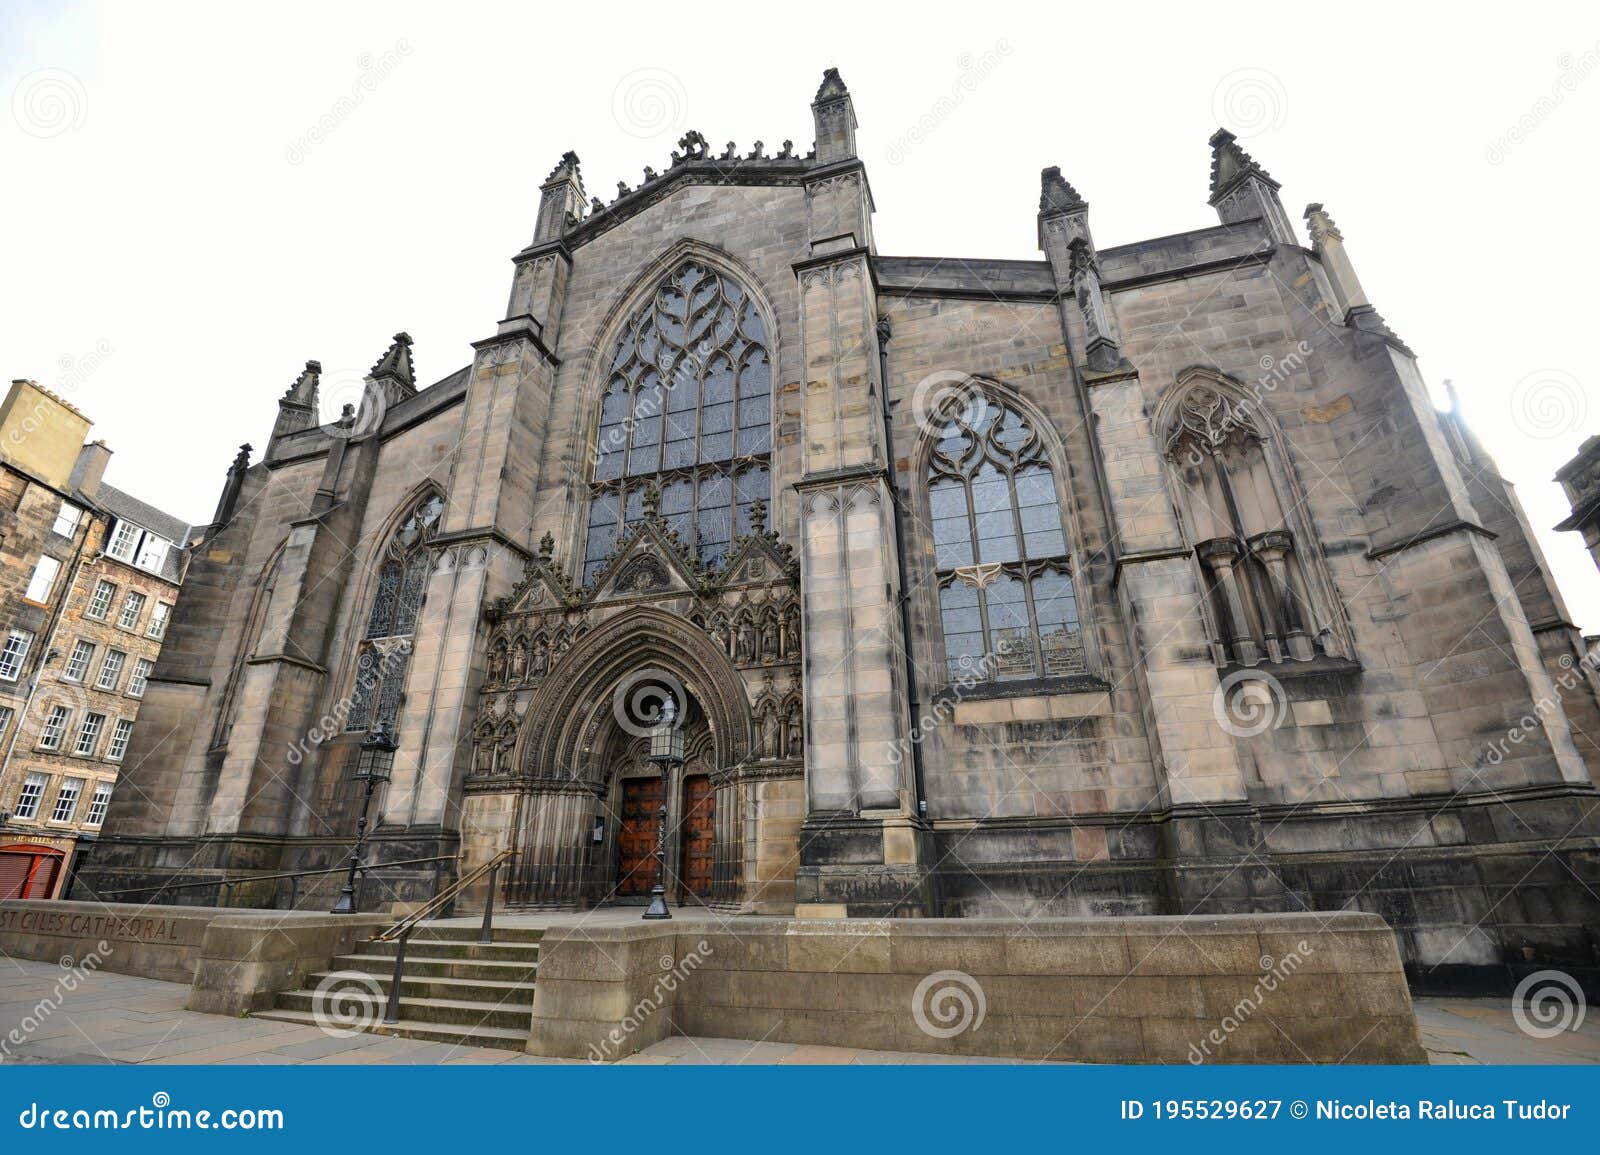 La Catedral De San Giles El Alto Kirk De Edinburgh Es Una Iglesia  Parroquial De La Iglesia De Escocia Situada En El Casco Antiguo Fotografía  editorial - Imagen de exterior, quemadura: 195529627